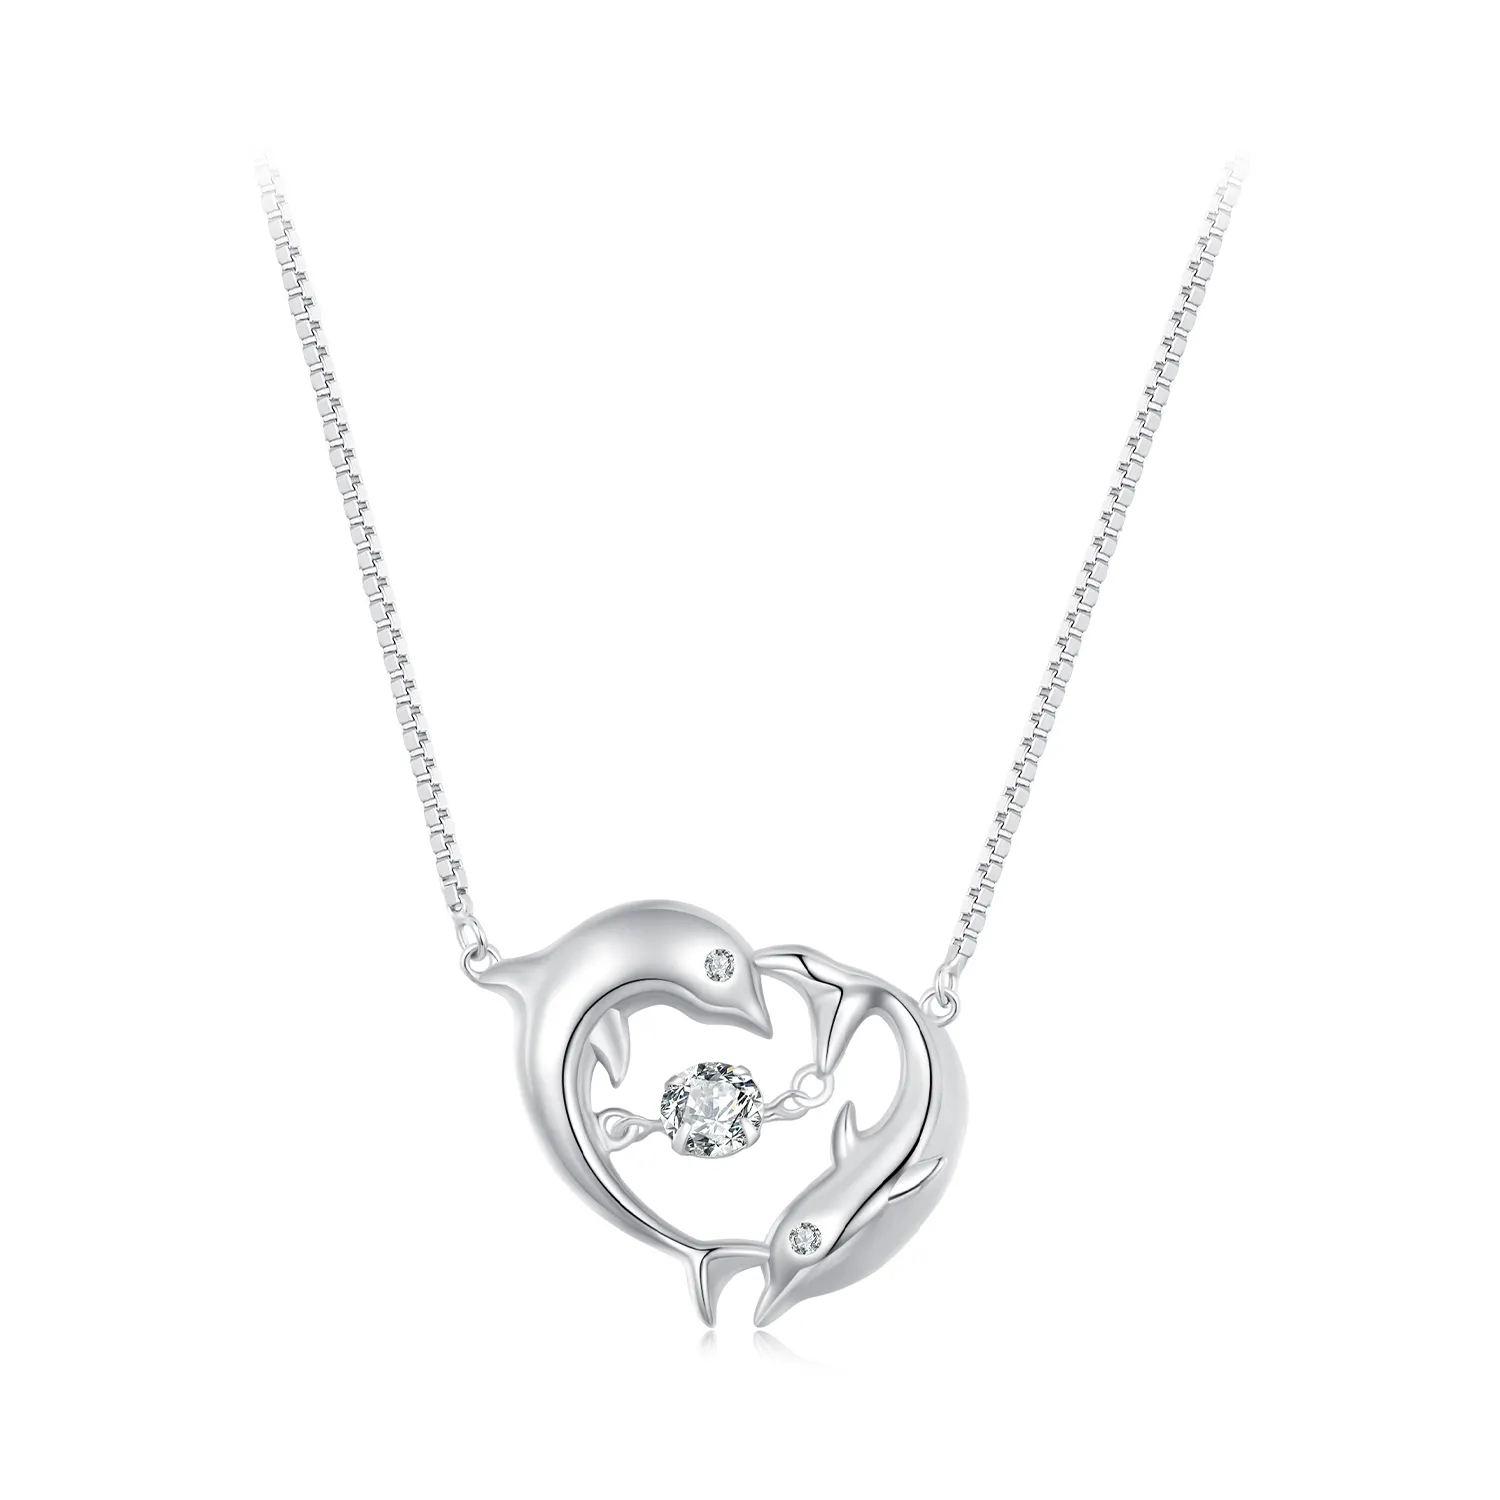 Pandora Style Dolphin Smart Necklace - BSN340